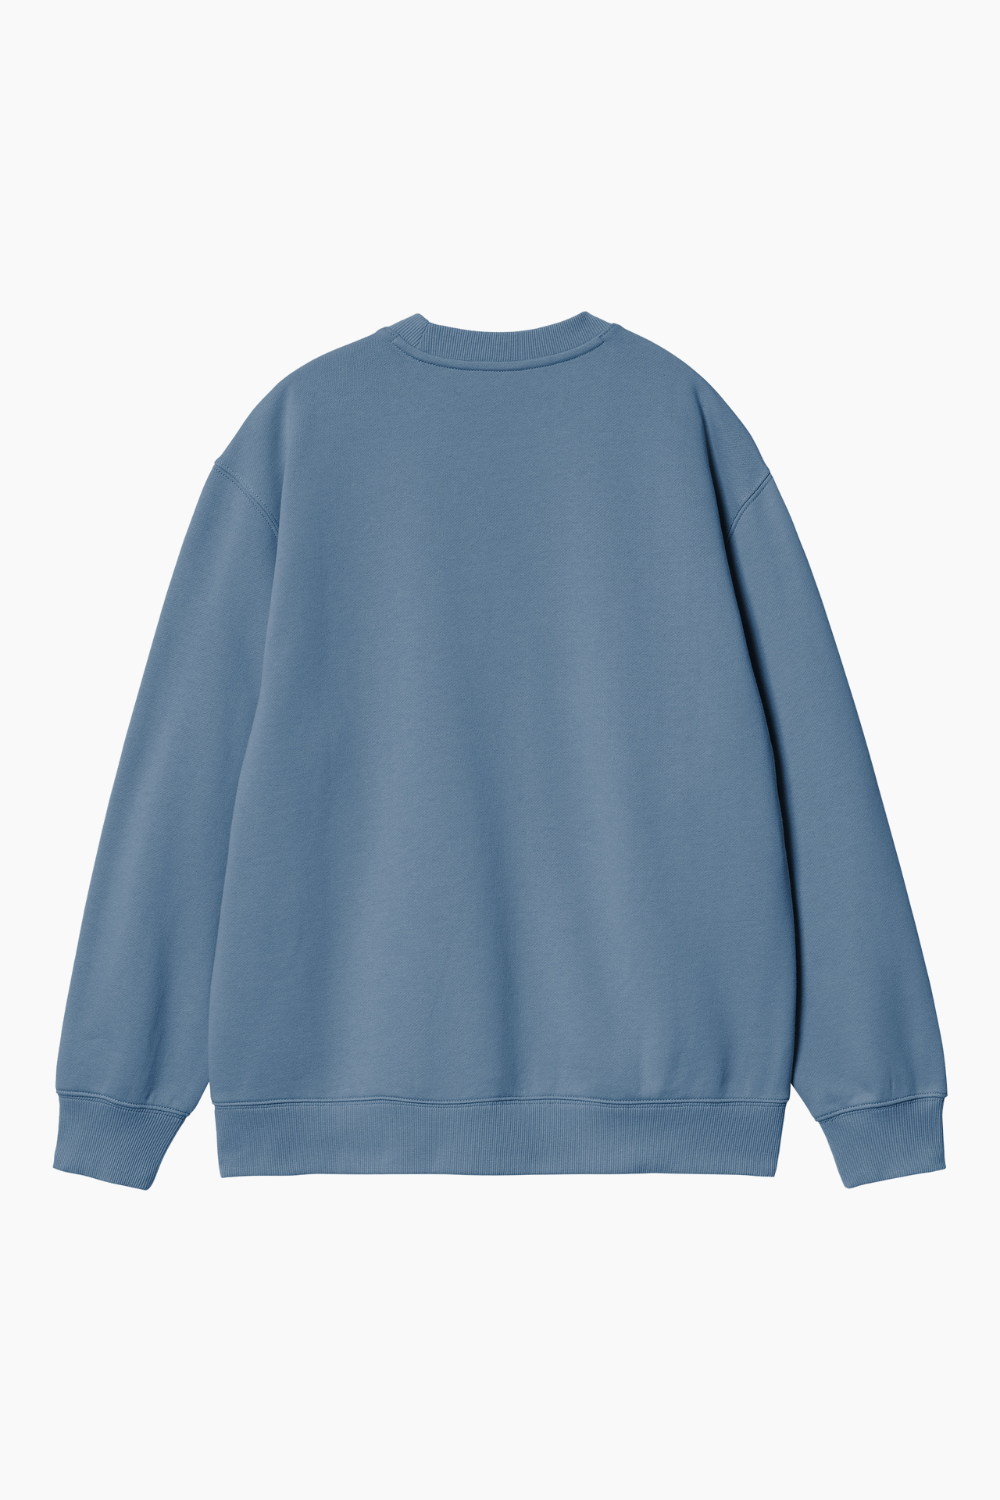 W' Carhartt Sweatshirt - Sorrent/Glassy Pink - Carhartt WIP